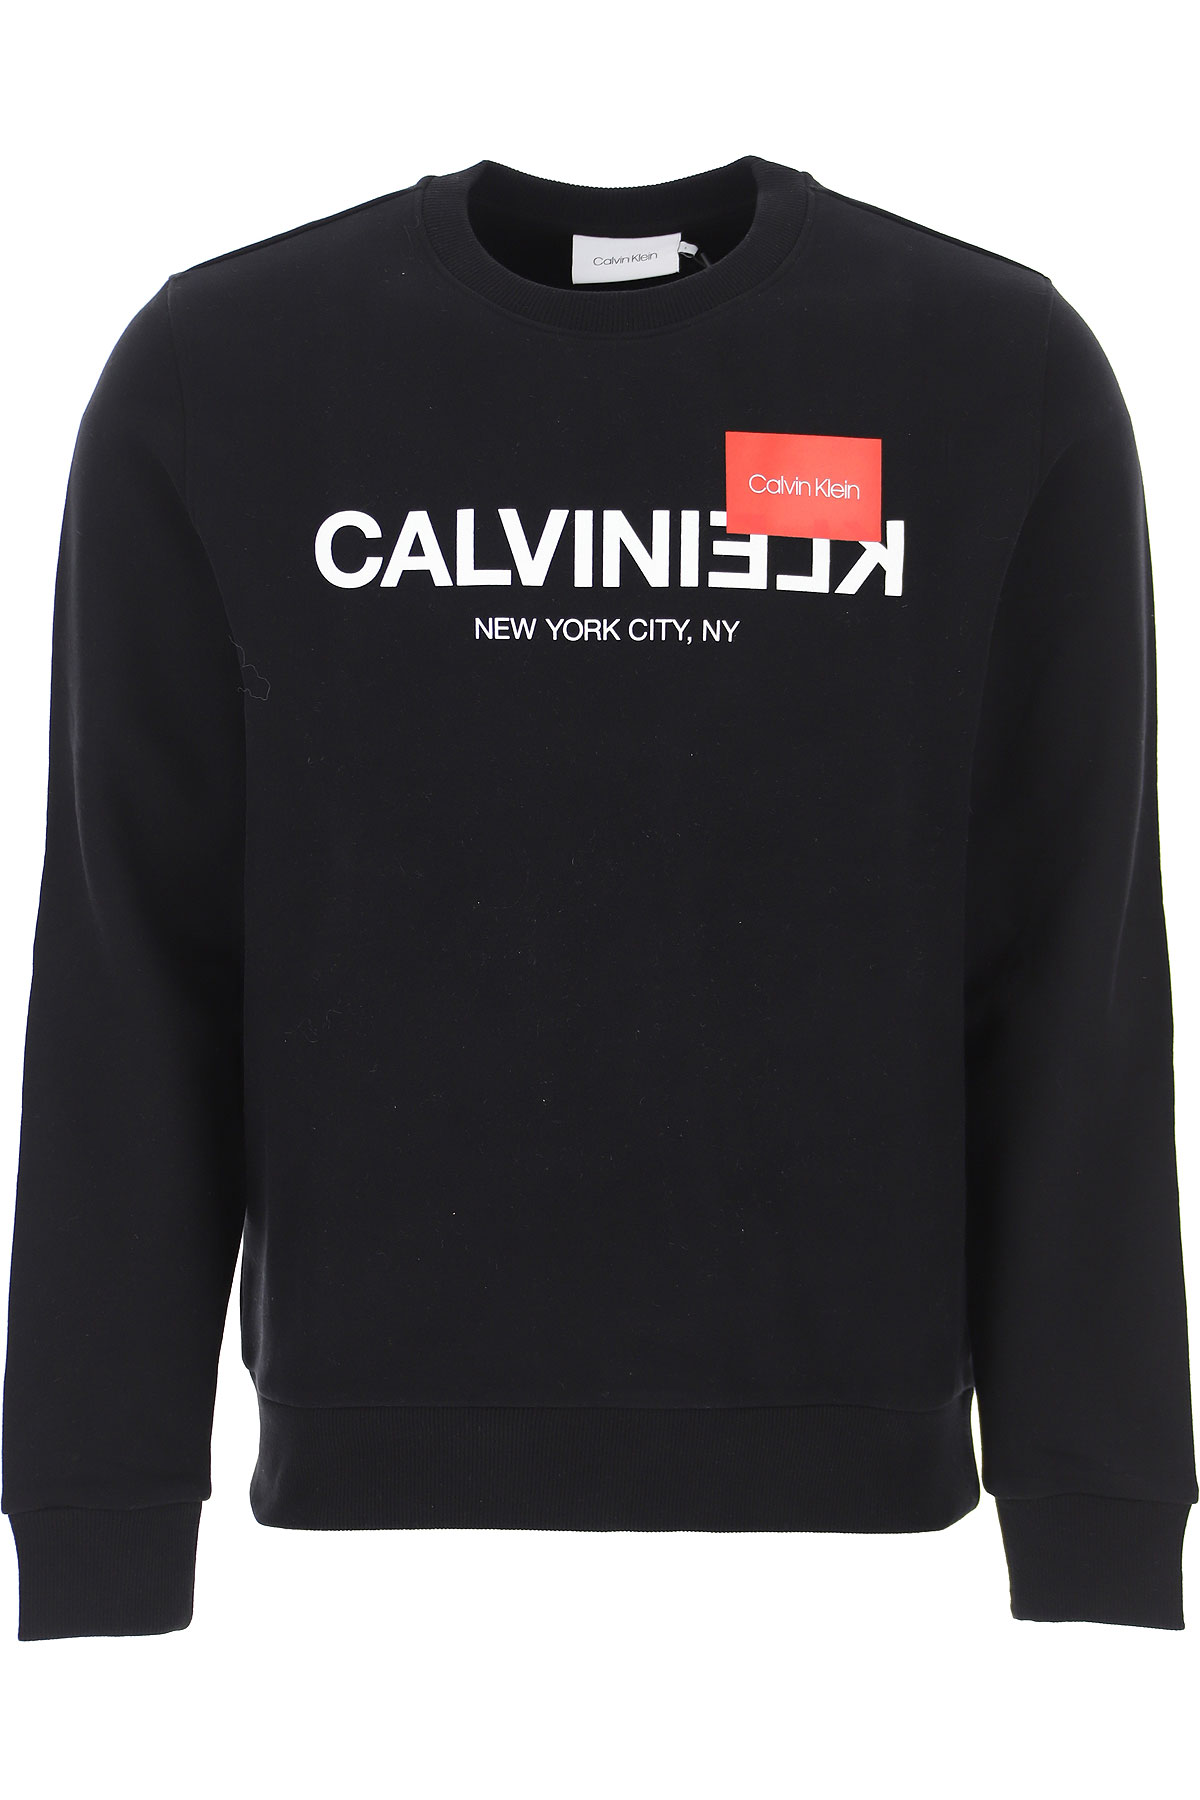 Mens Clothing Calvin Klein, Style code: k10k104517-bds-